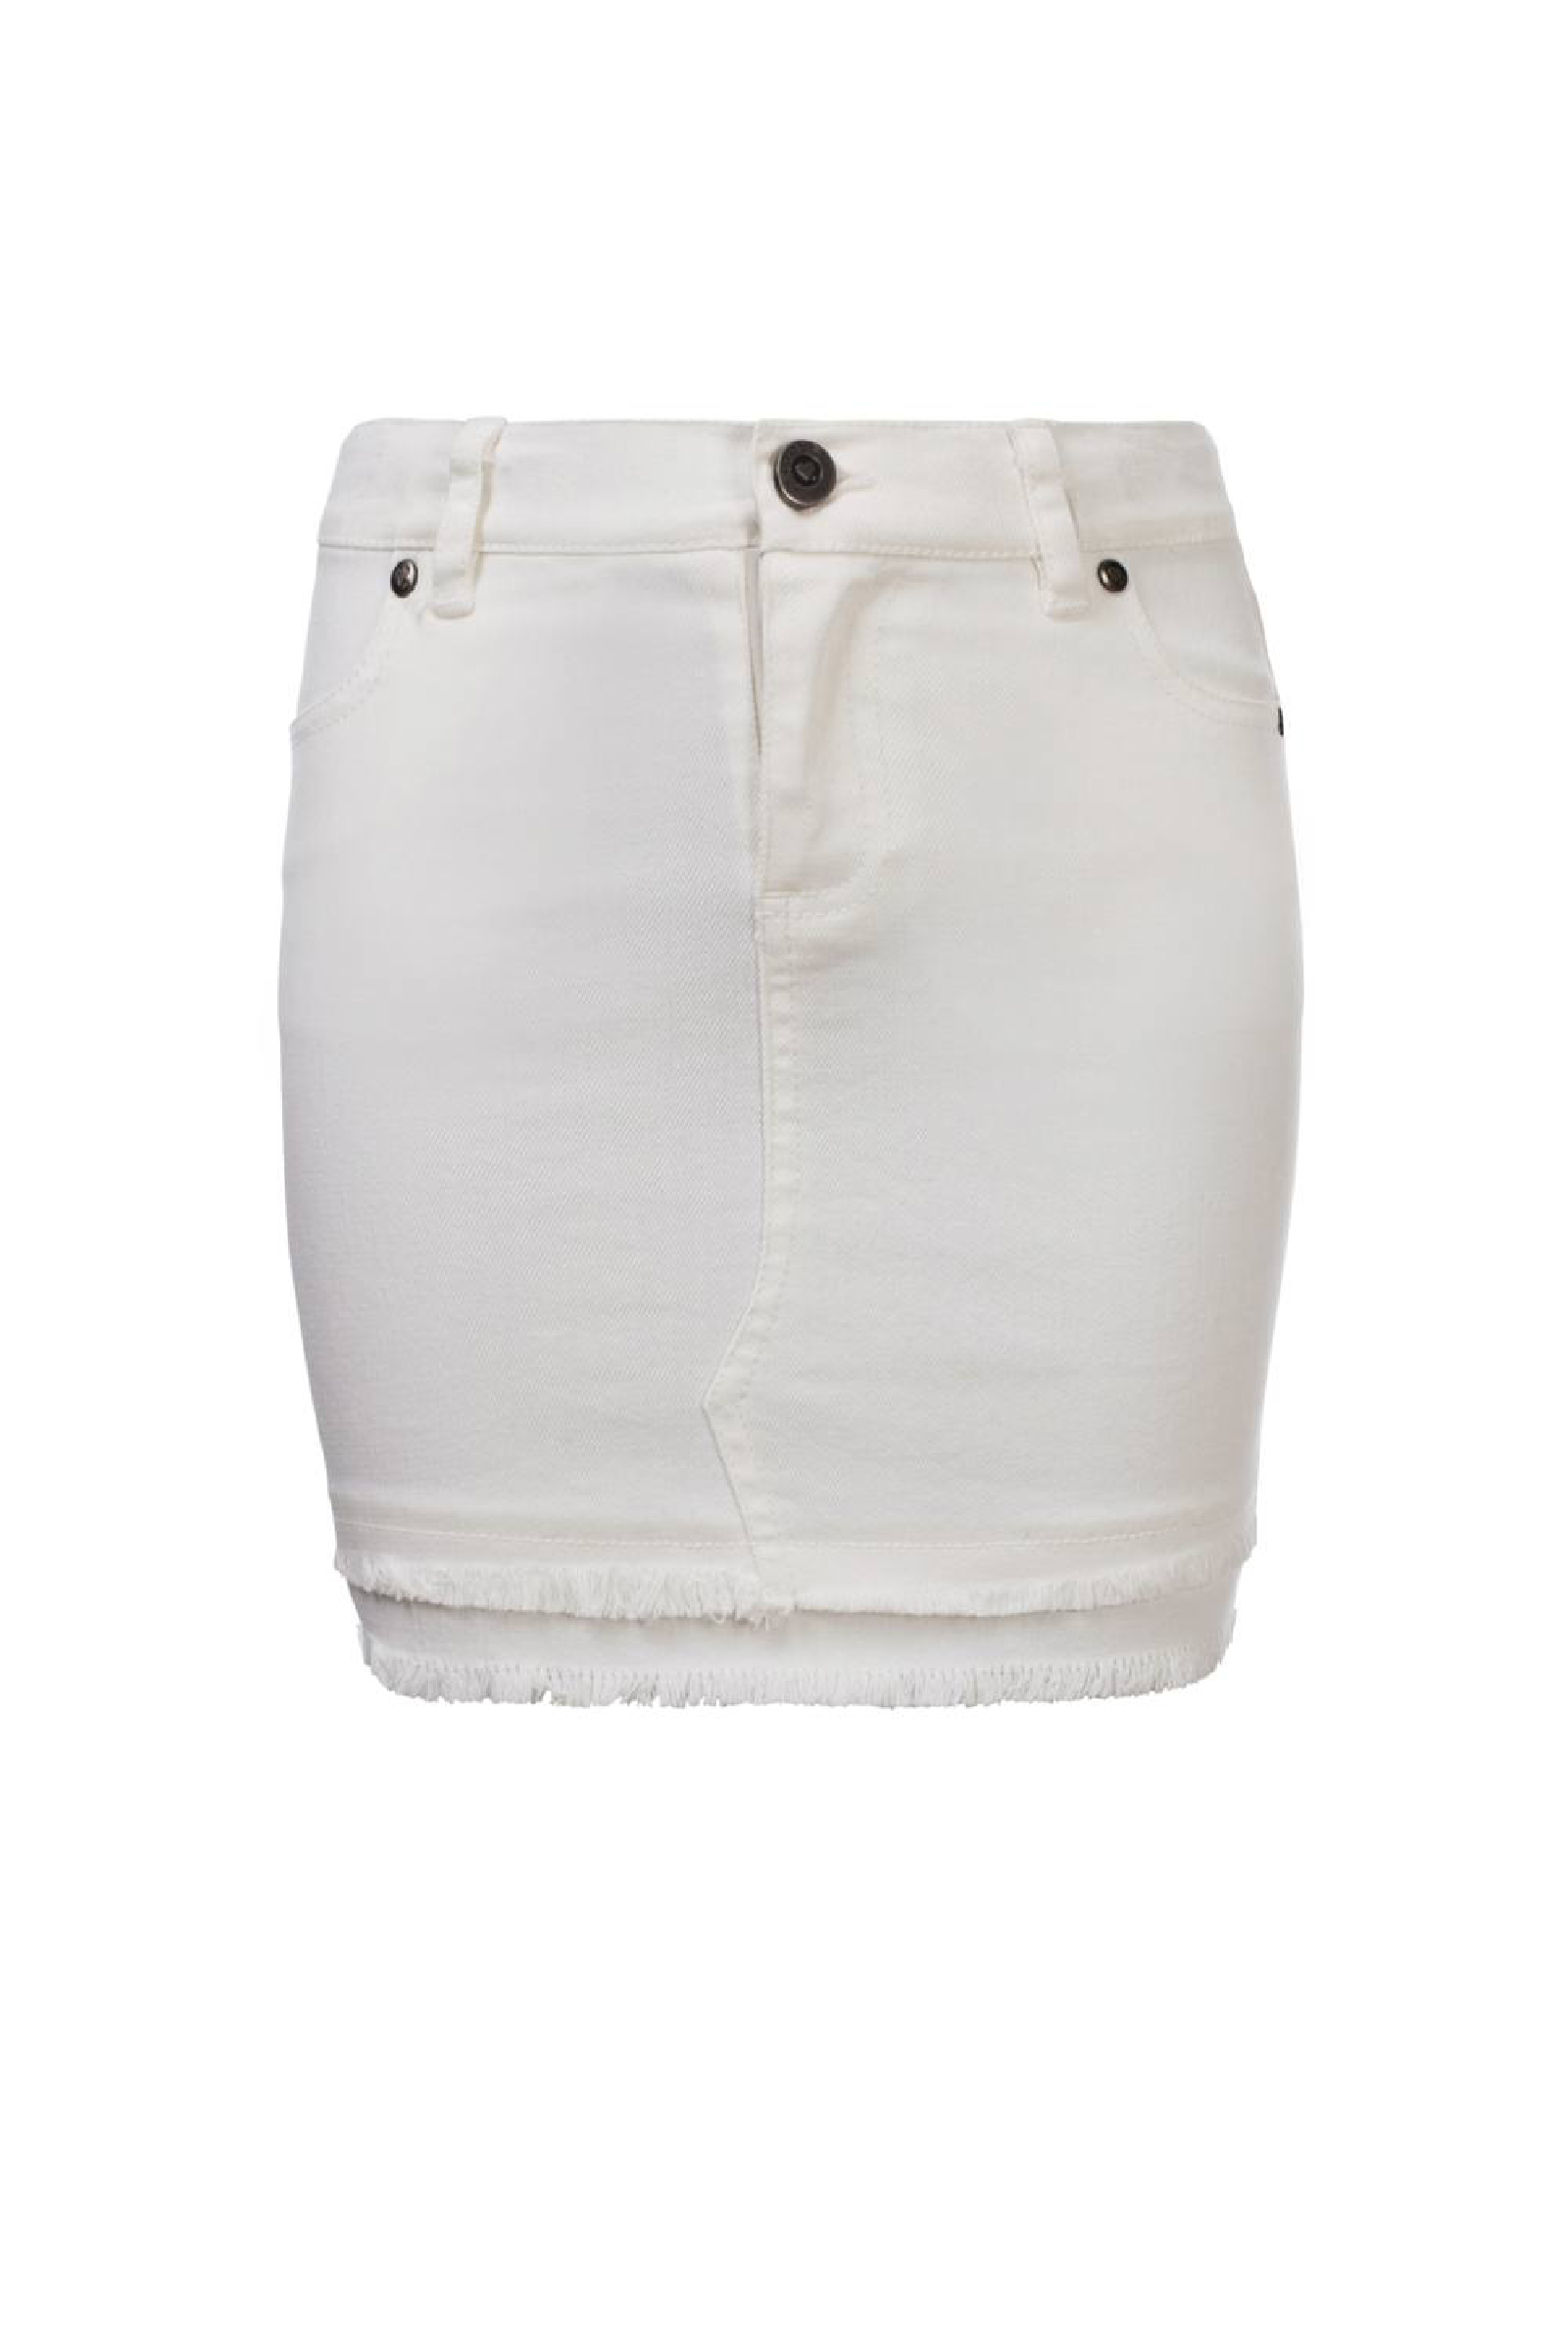 Meisjes Girls white denim skirt van Looxs Revol. in de kleur Off White in maat 164.